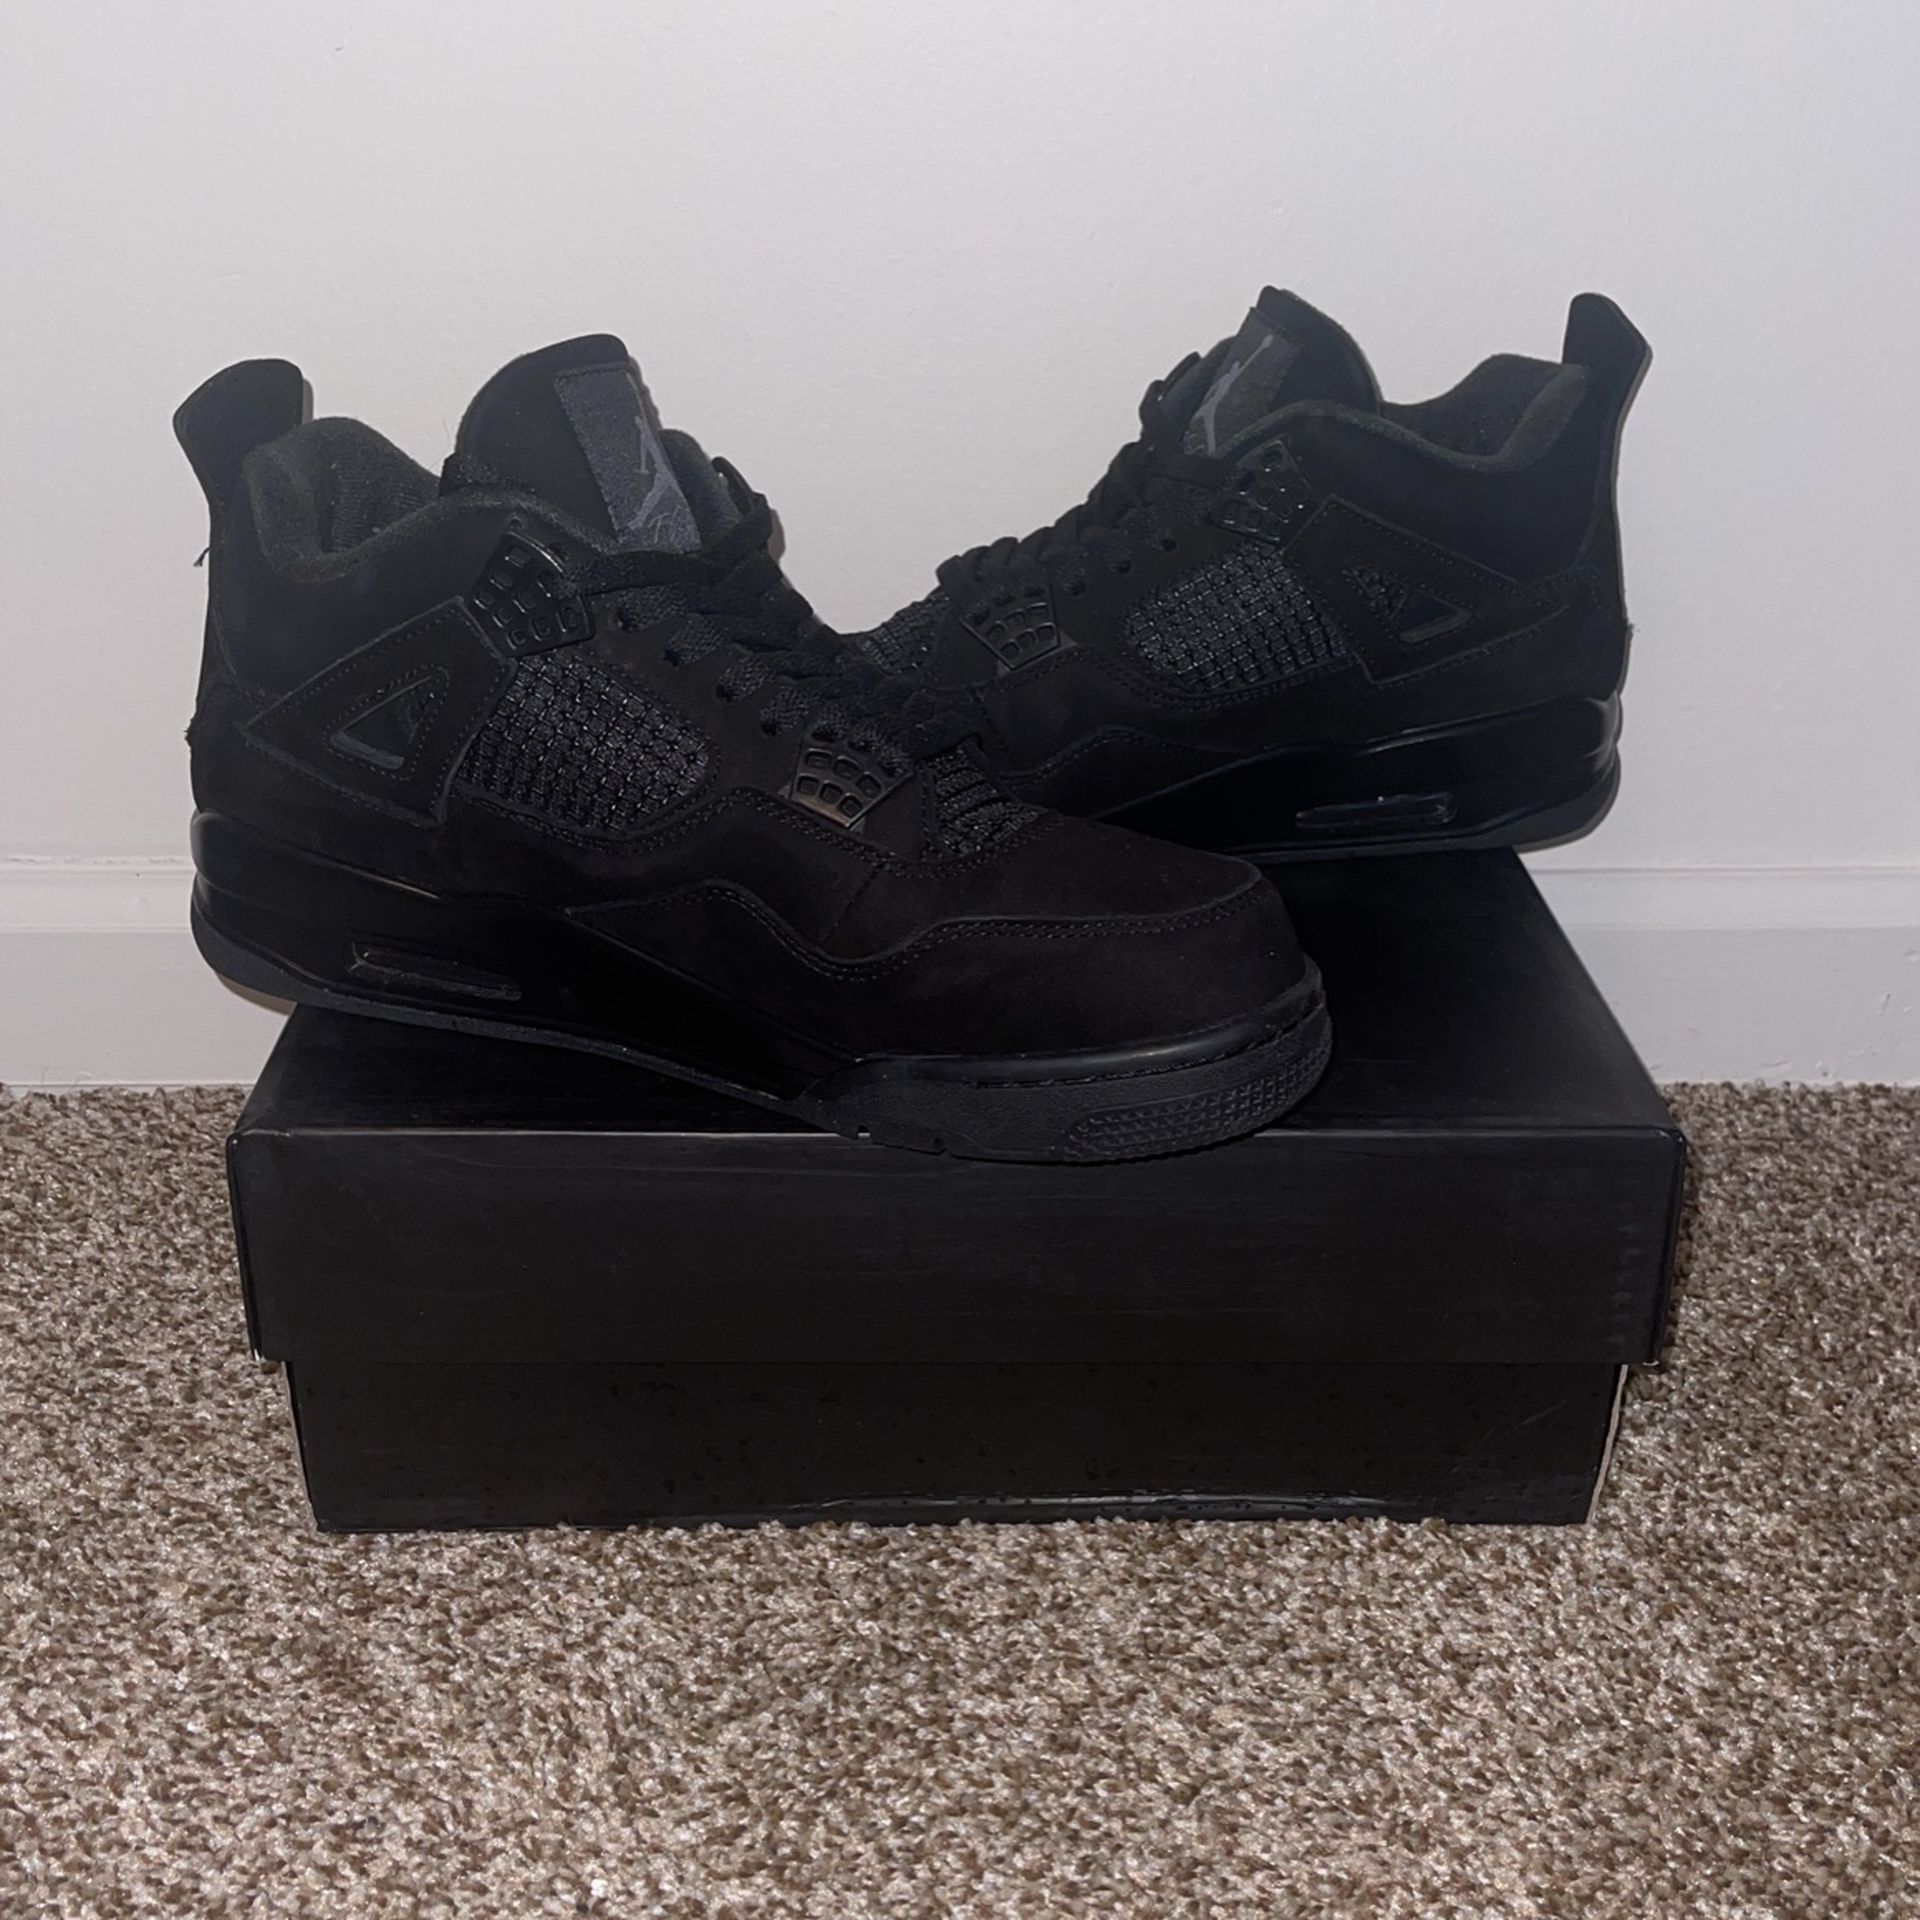 Air Jordan 4 Black Cat Size 11